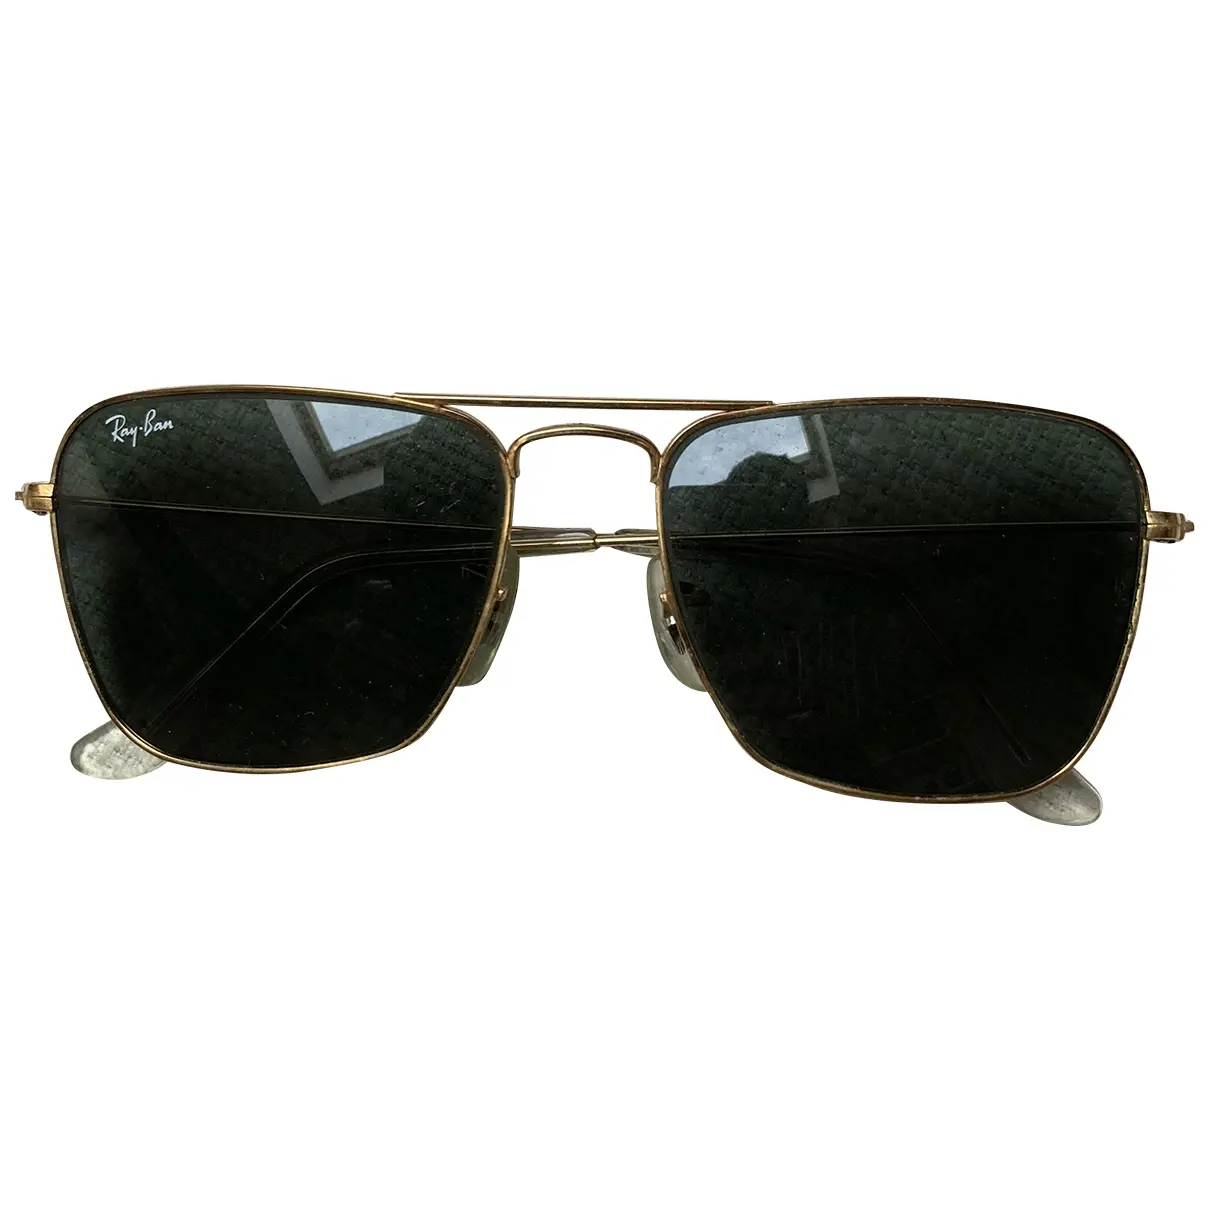 Original Wayfarer aviator sunglasses Ray-Ban - Vintage